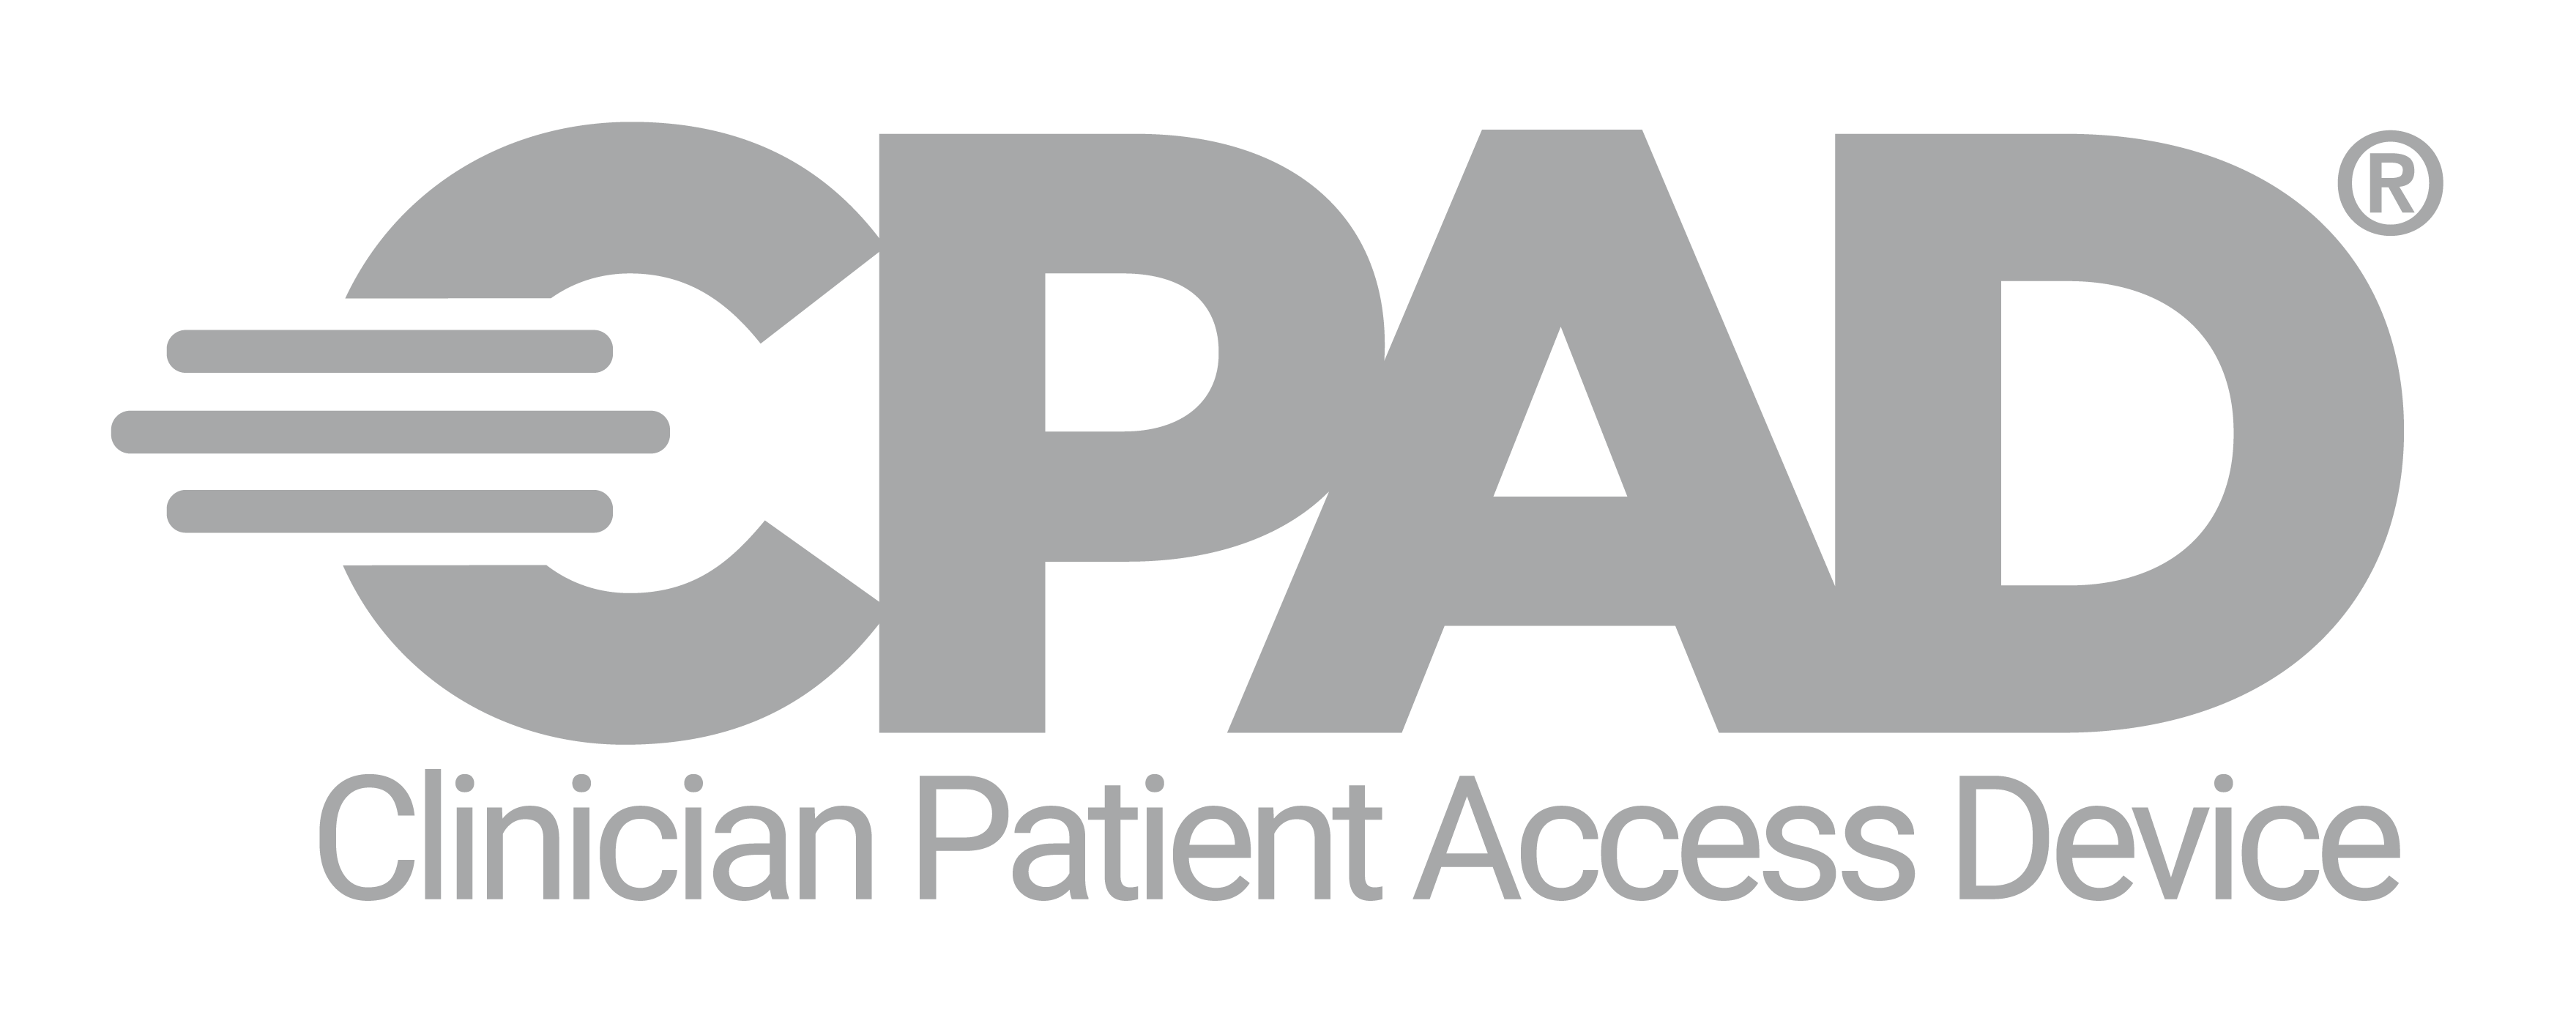 Clinician Patient Access Device